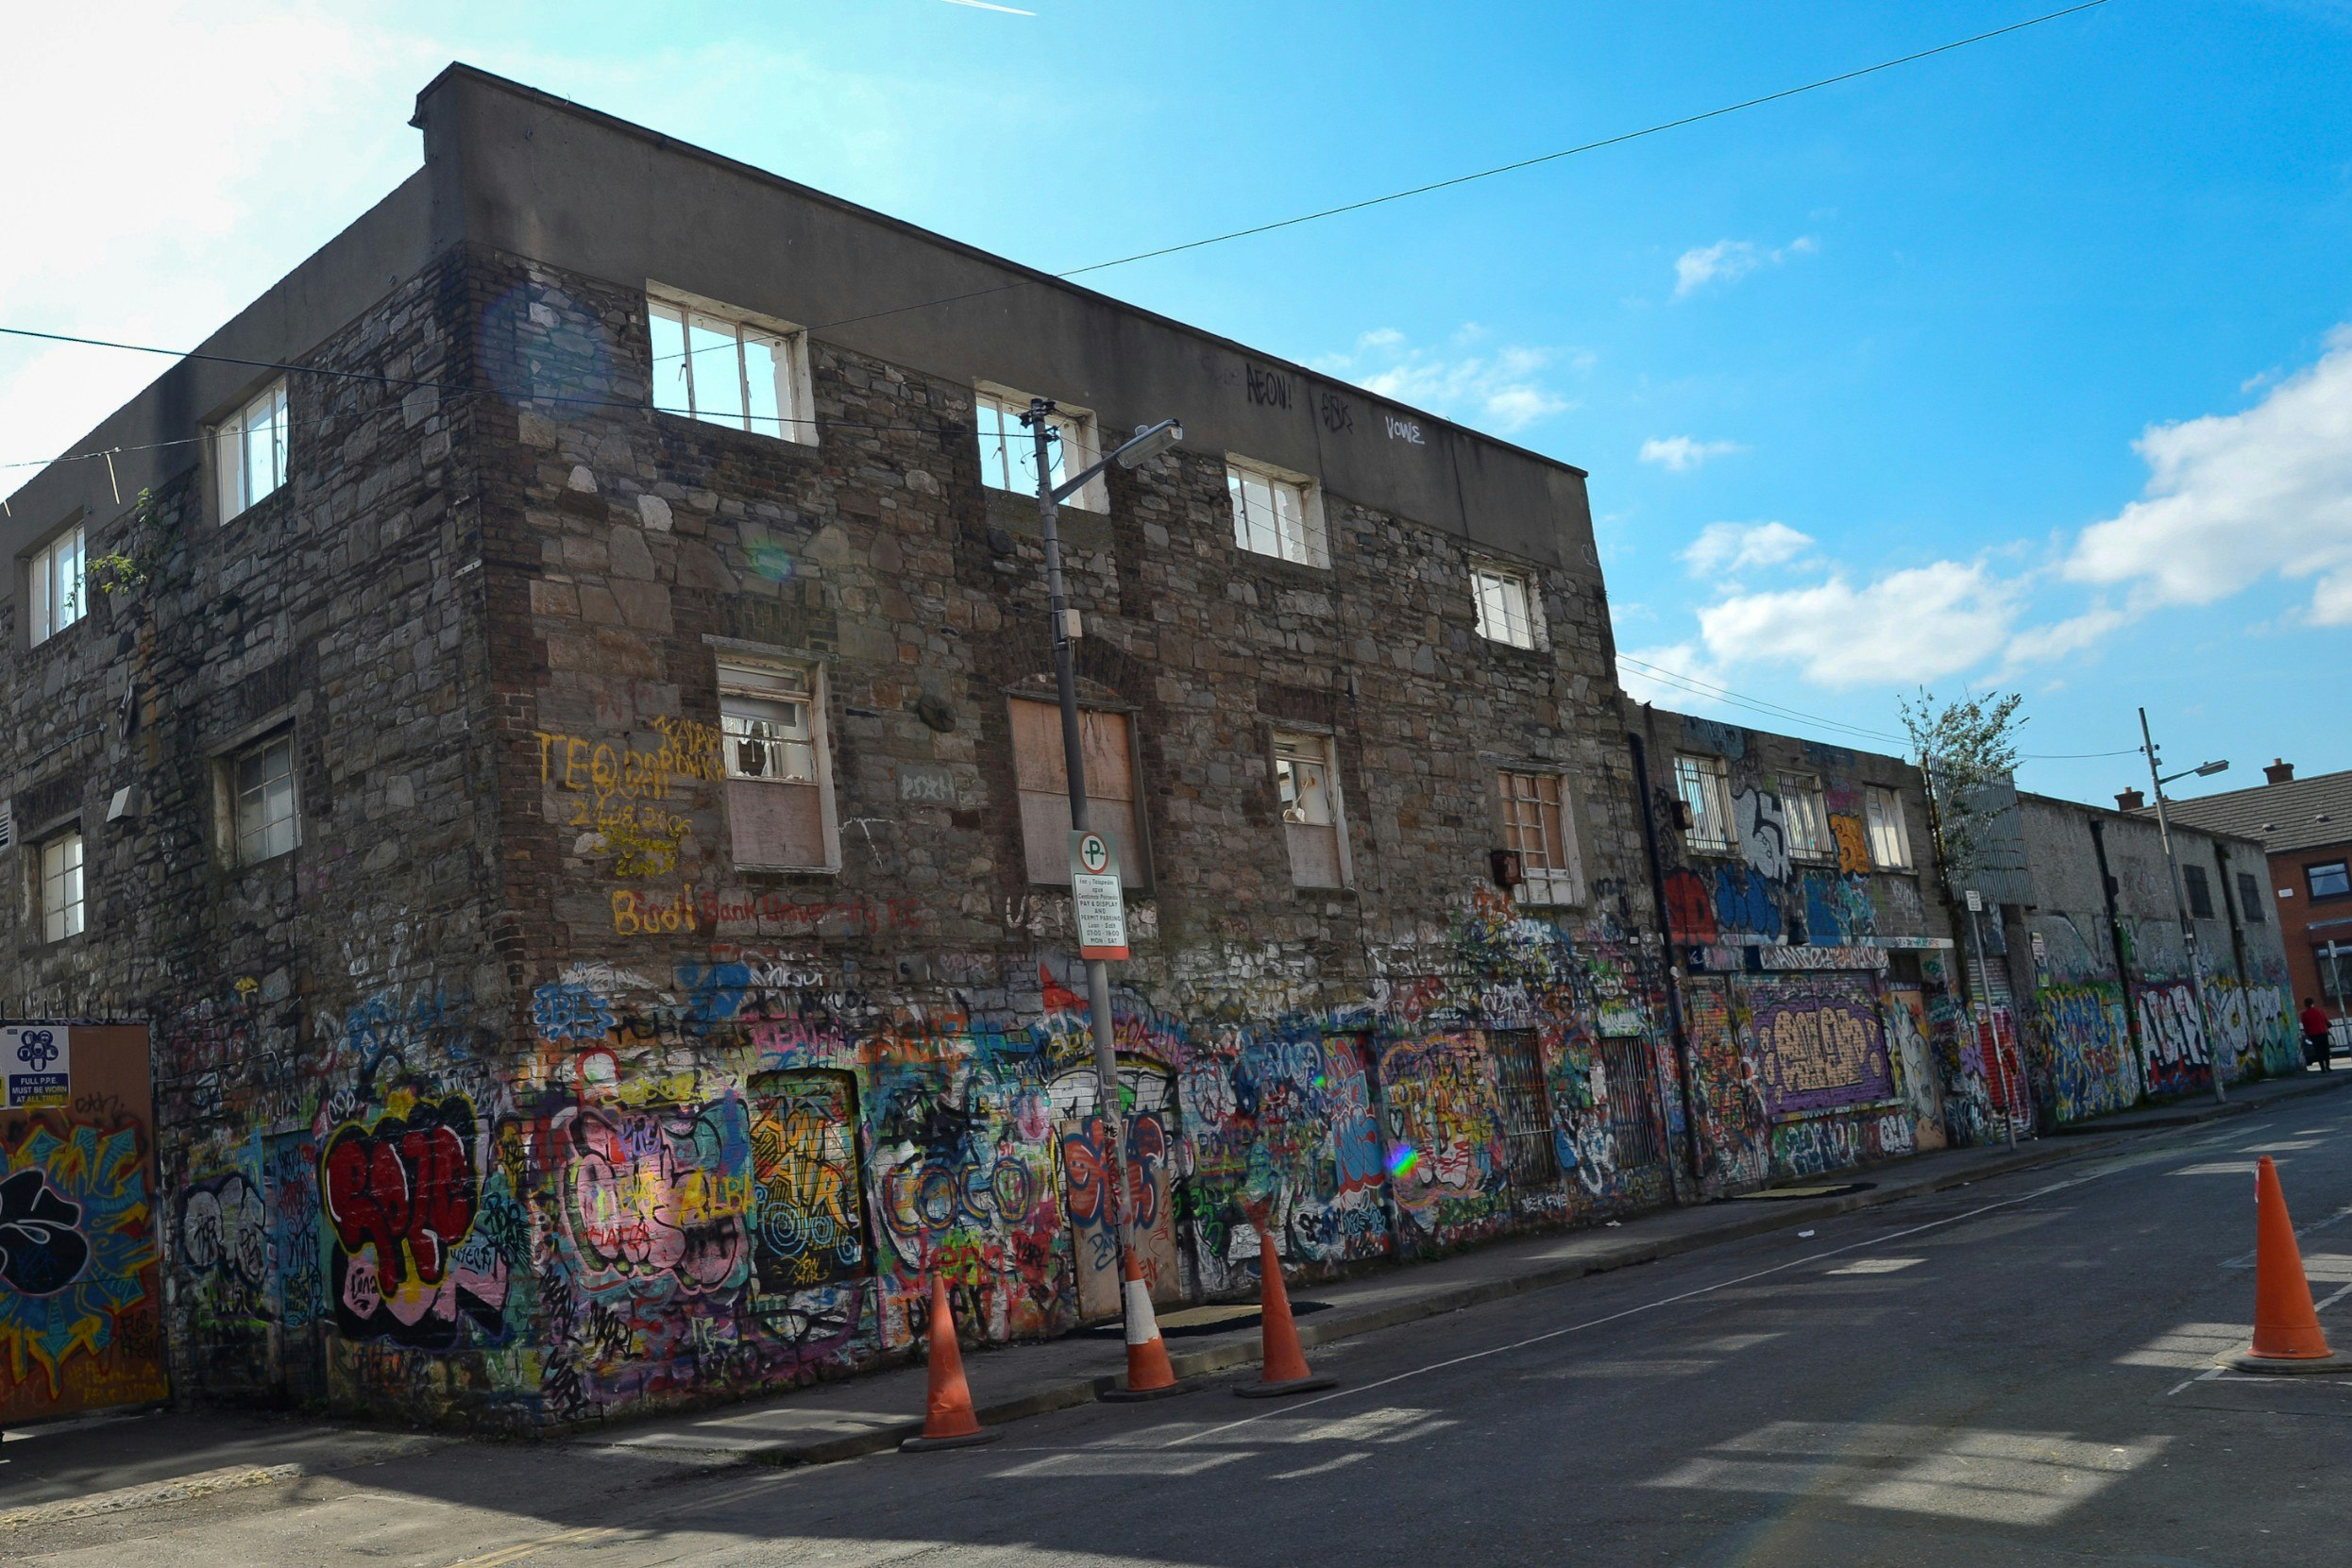 The original Windmill Lane.studio in Dublin covered in graffiti